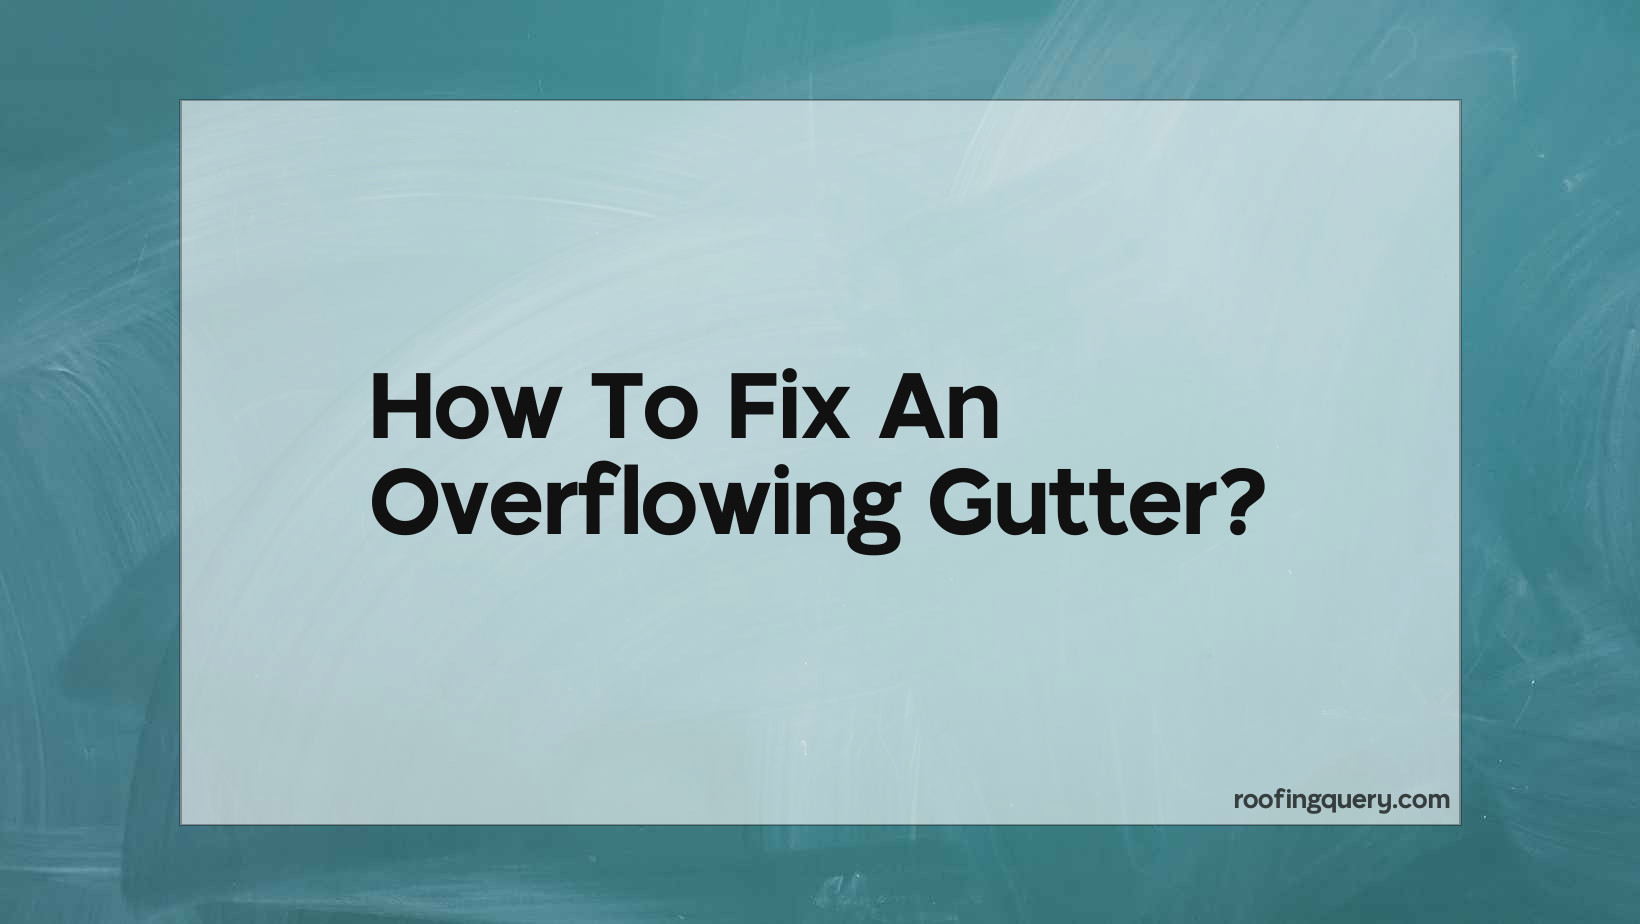 How To Fix An Overflowing Gutter